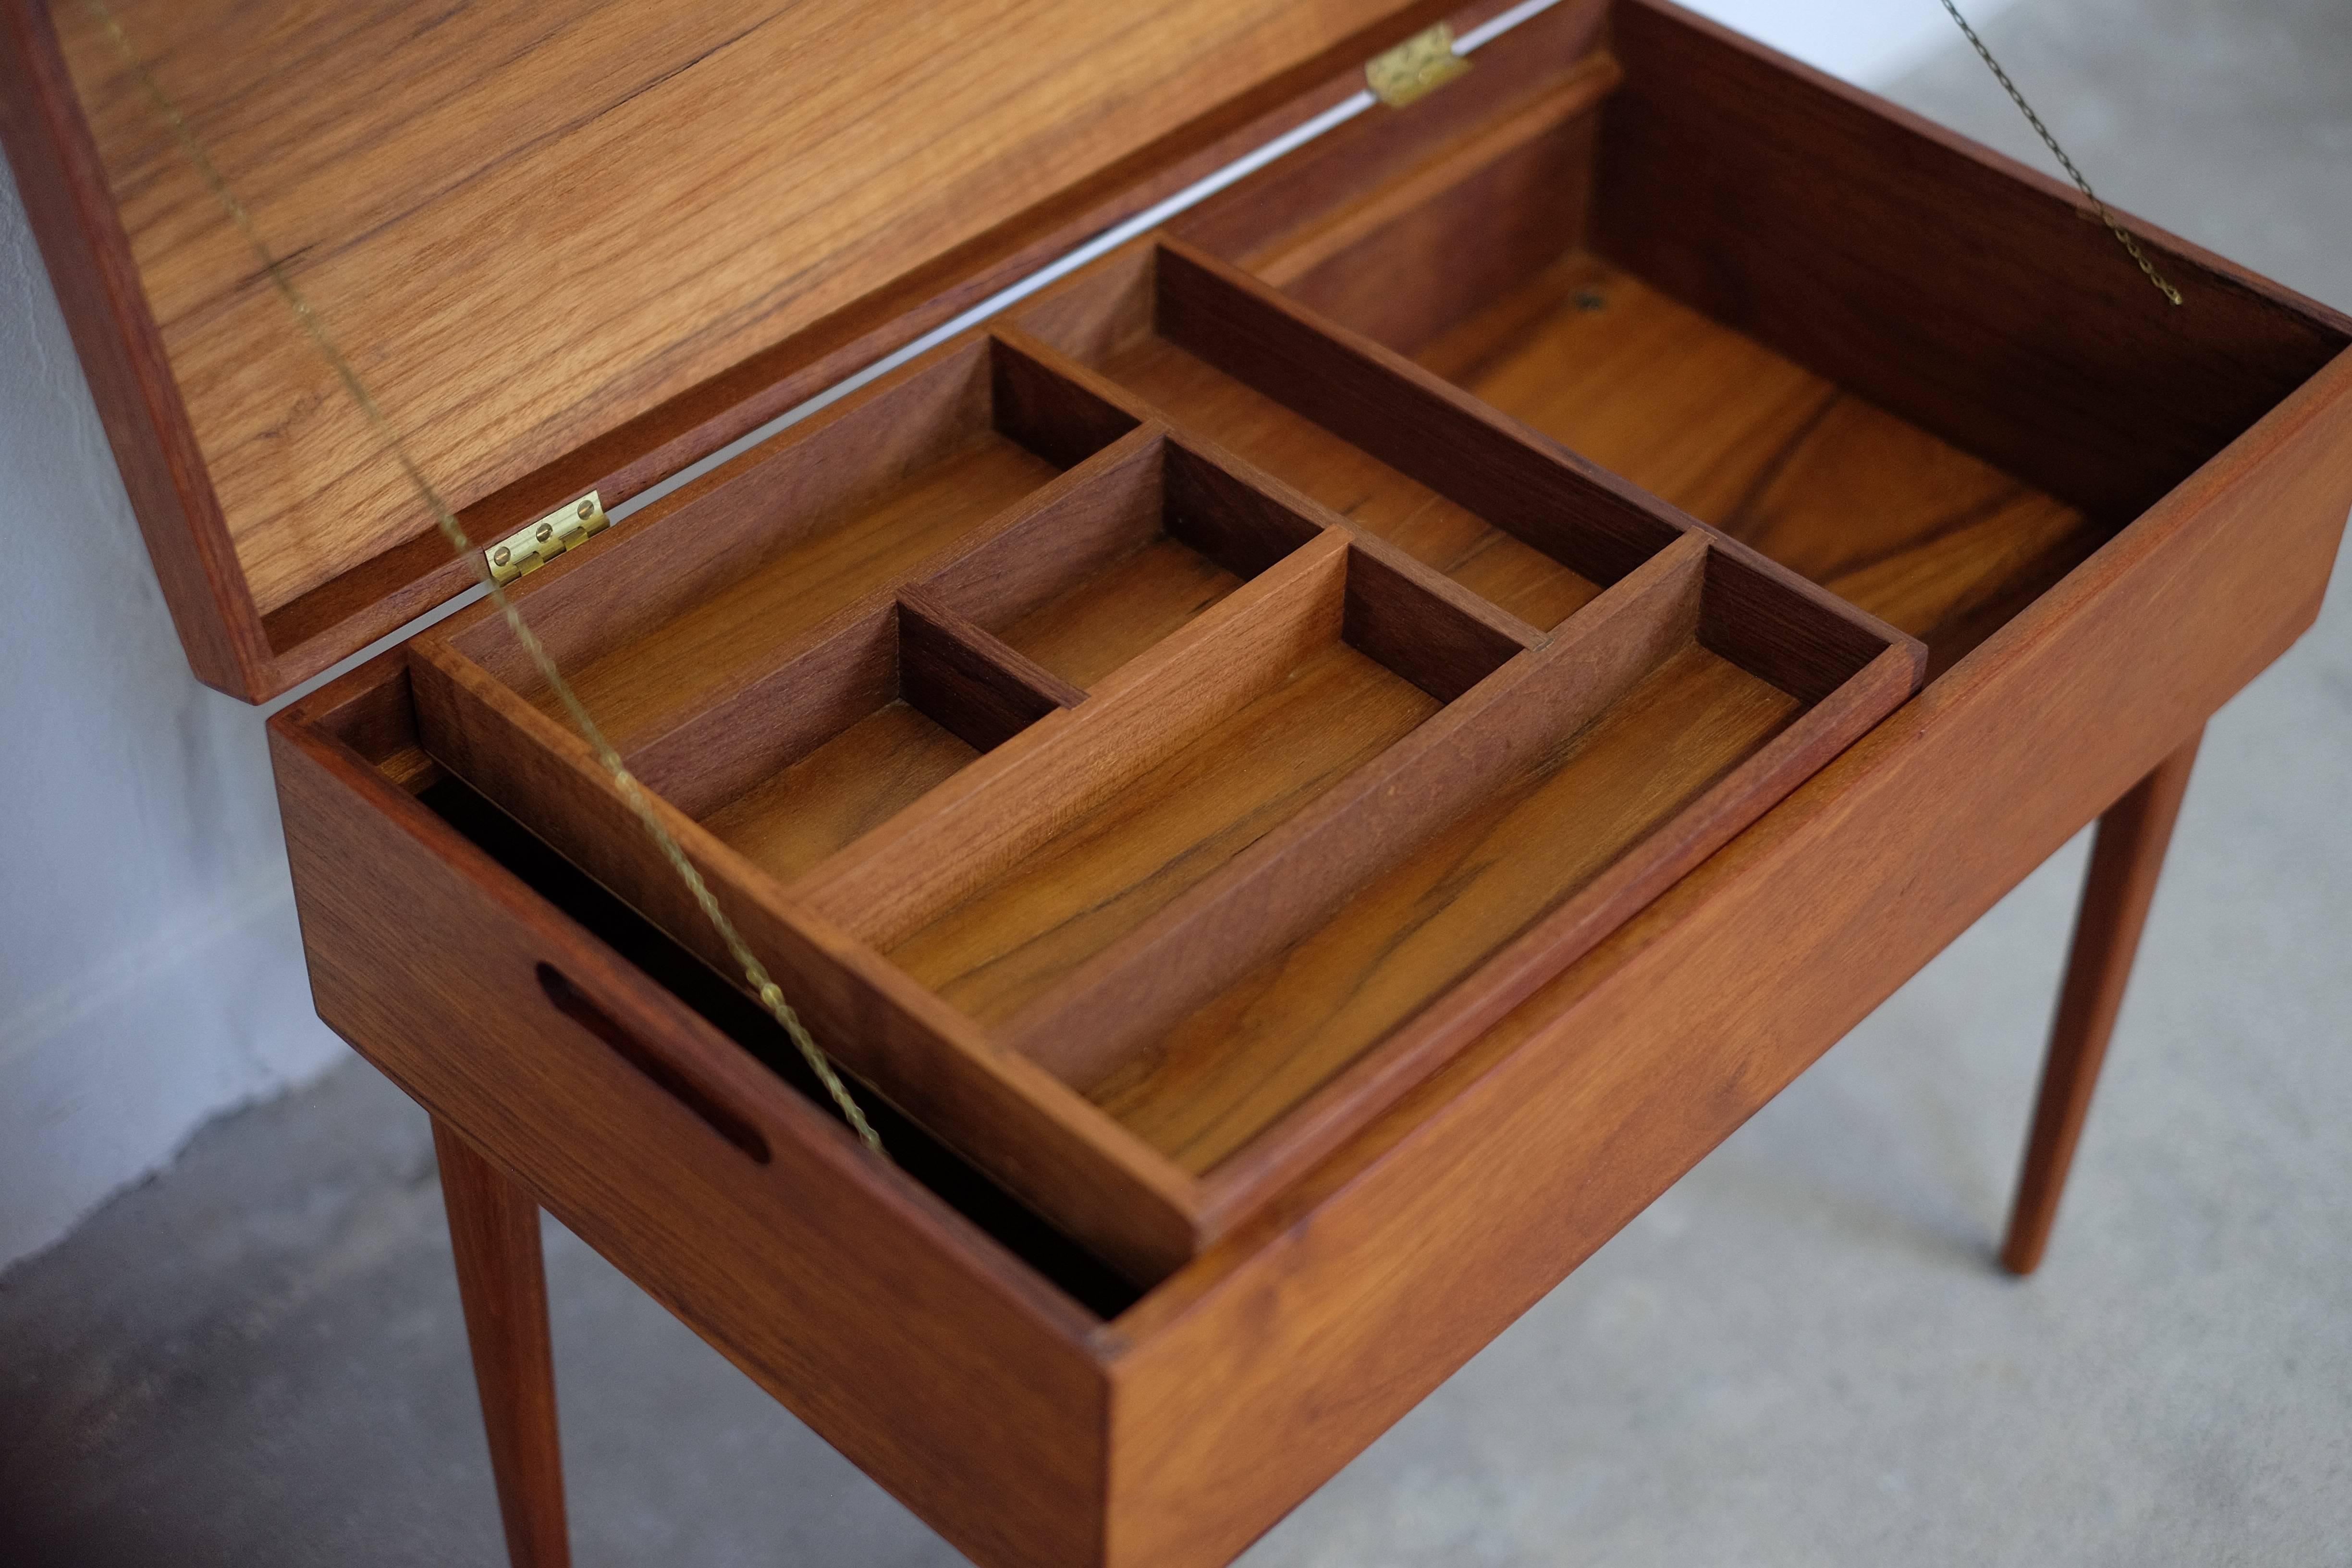 Brass Elegant Sewing Table in Teak, Danish Design